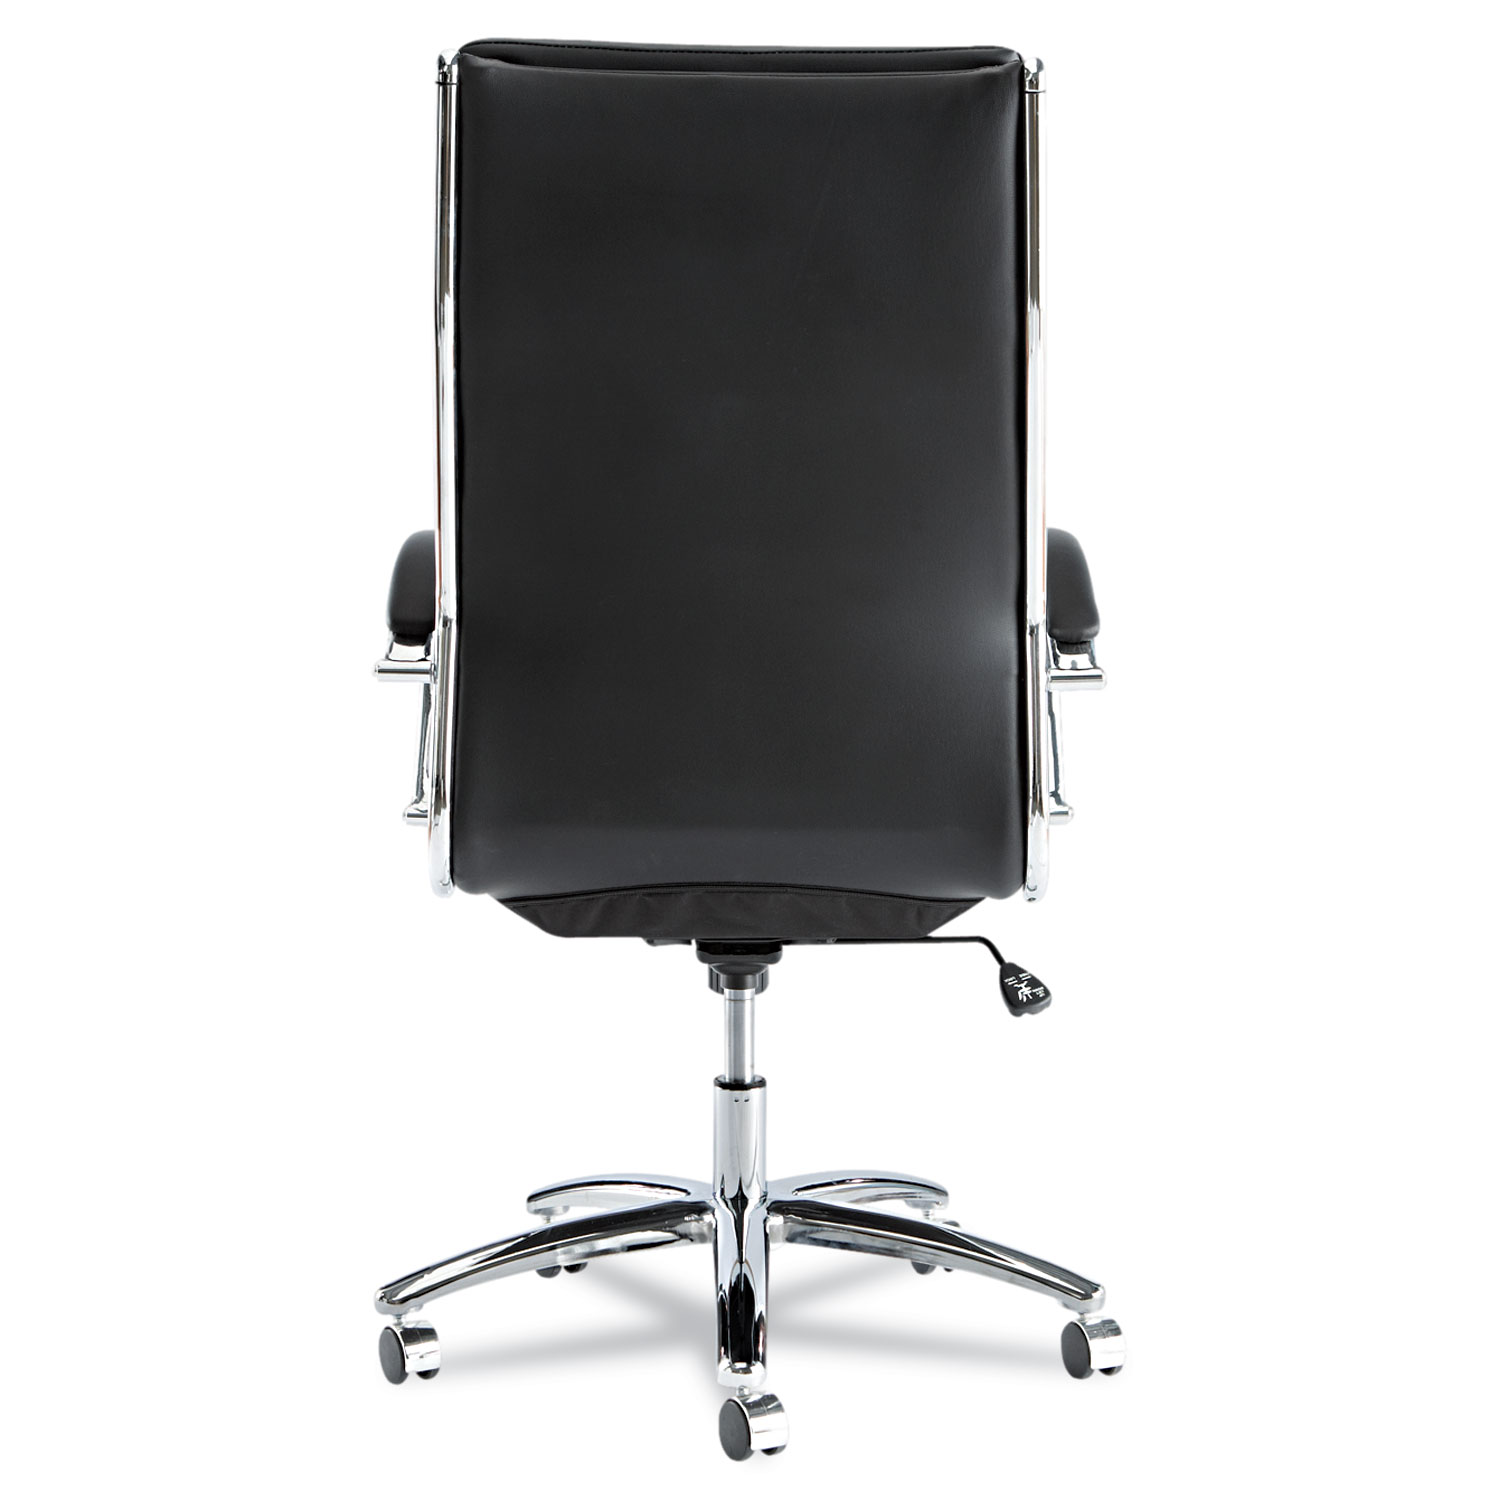 Alera Neratoli High-Back Slim Profile Chair, Faux Leather, 275 lb Cap, 17.32" to 21.25" Seat Height, Black Seat/Back, Chrome - image 5 of 10